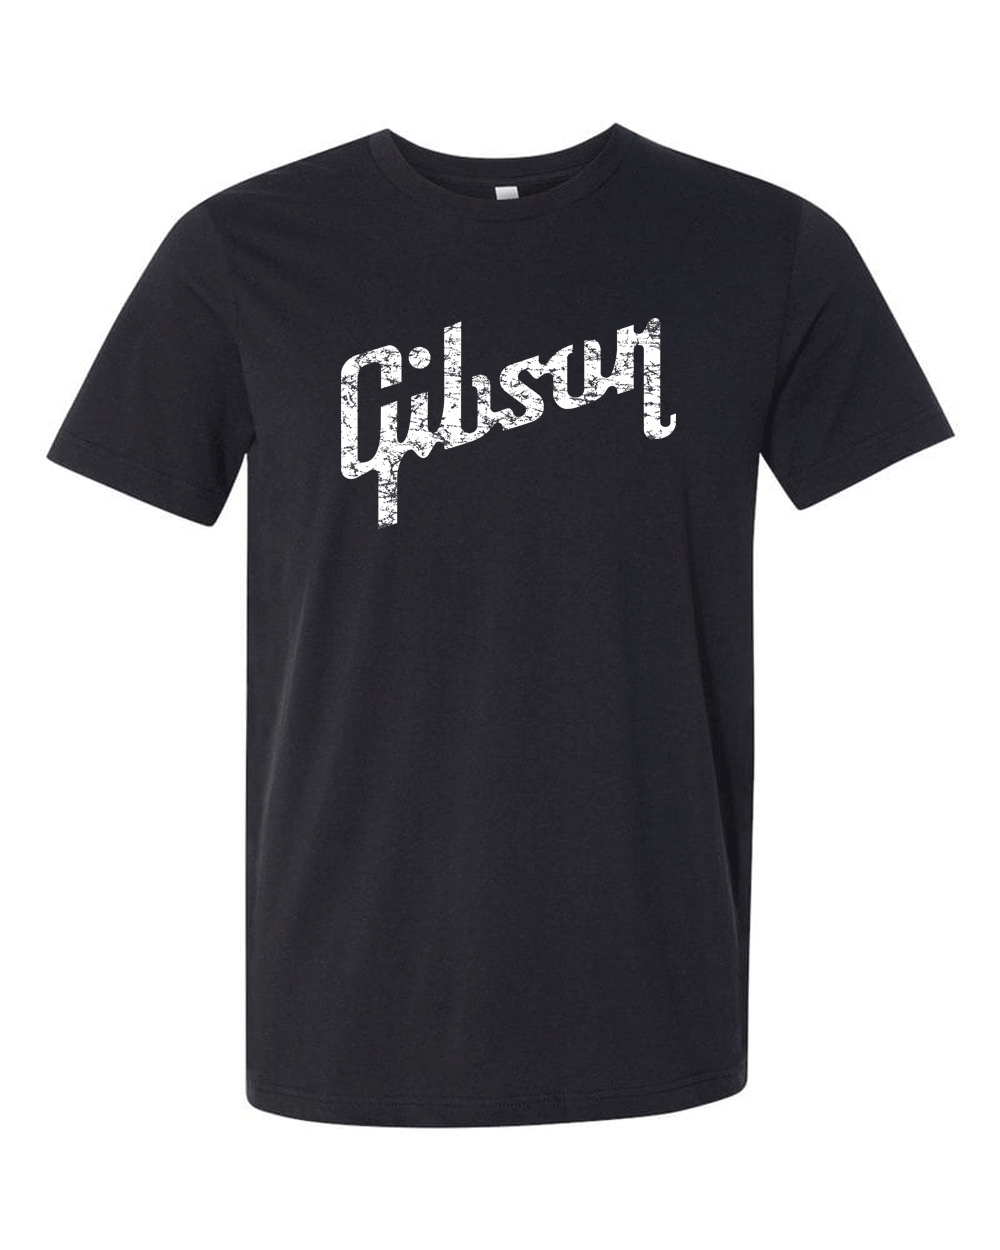 GIBSON GUITARS White Distress Logo Bella Canvas T-shirt FREE SHIPPING